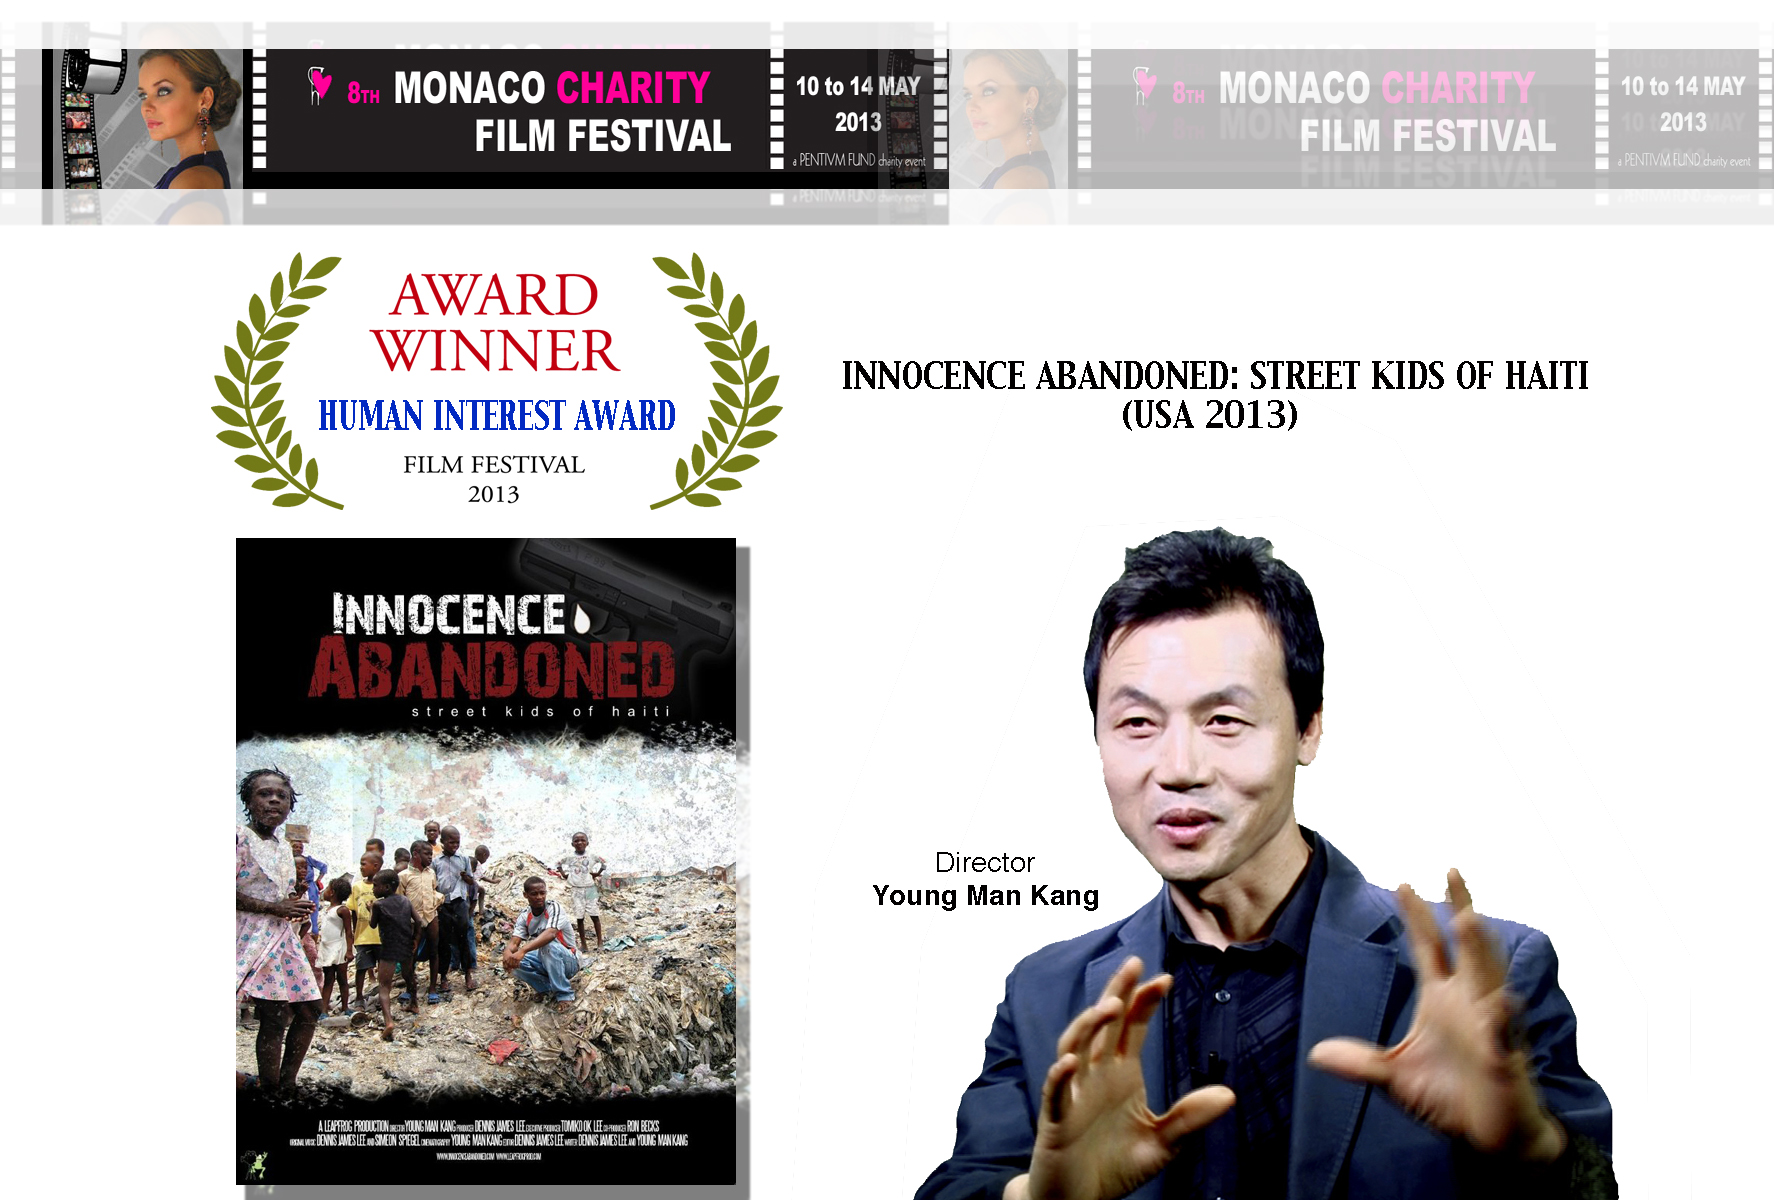 Human Interest Award 2013 Monaco Charity Film Festival - Director Young Man Kang 